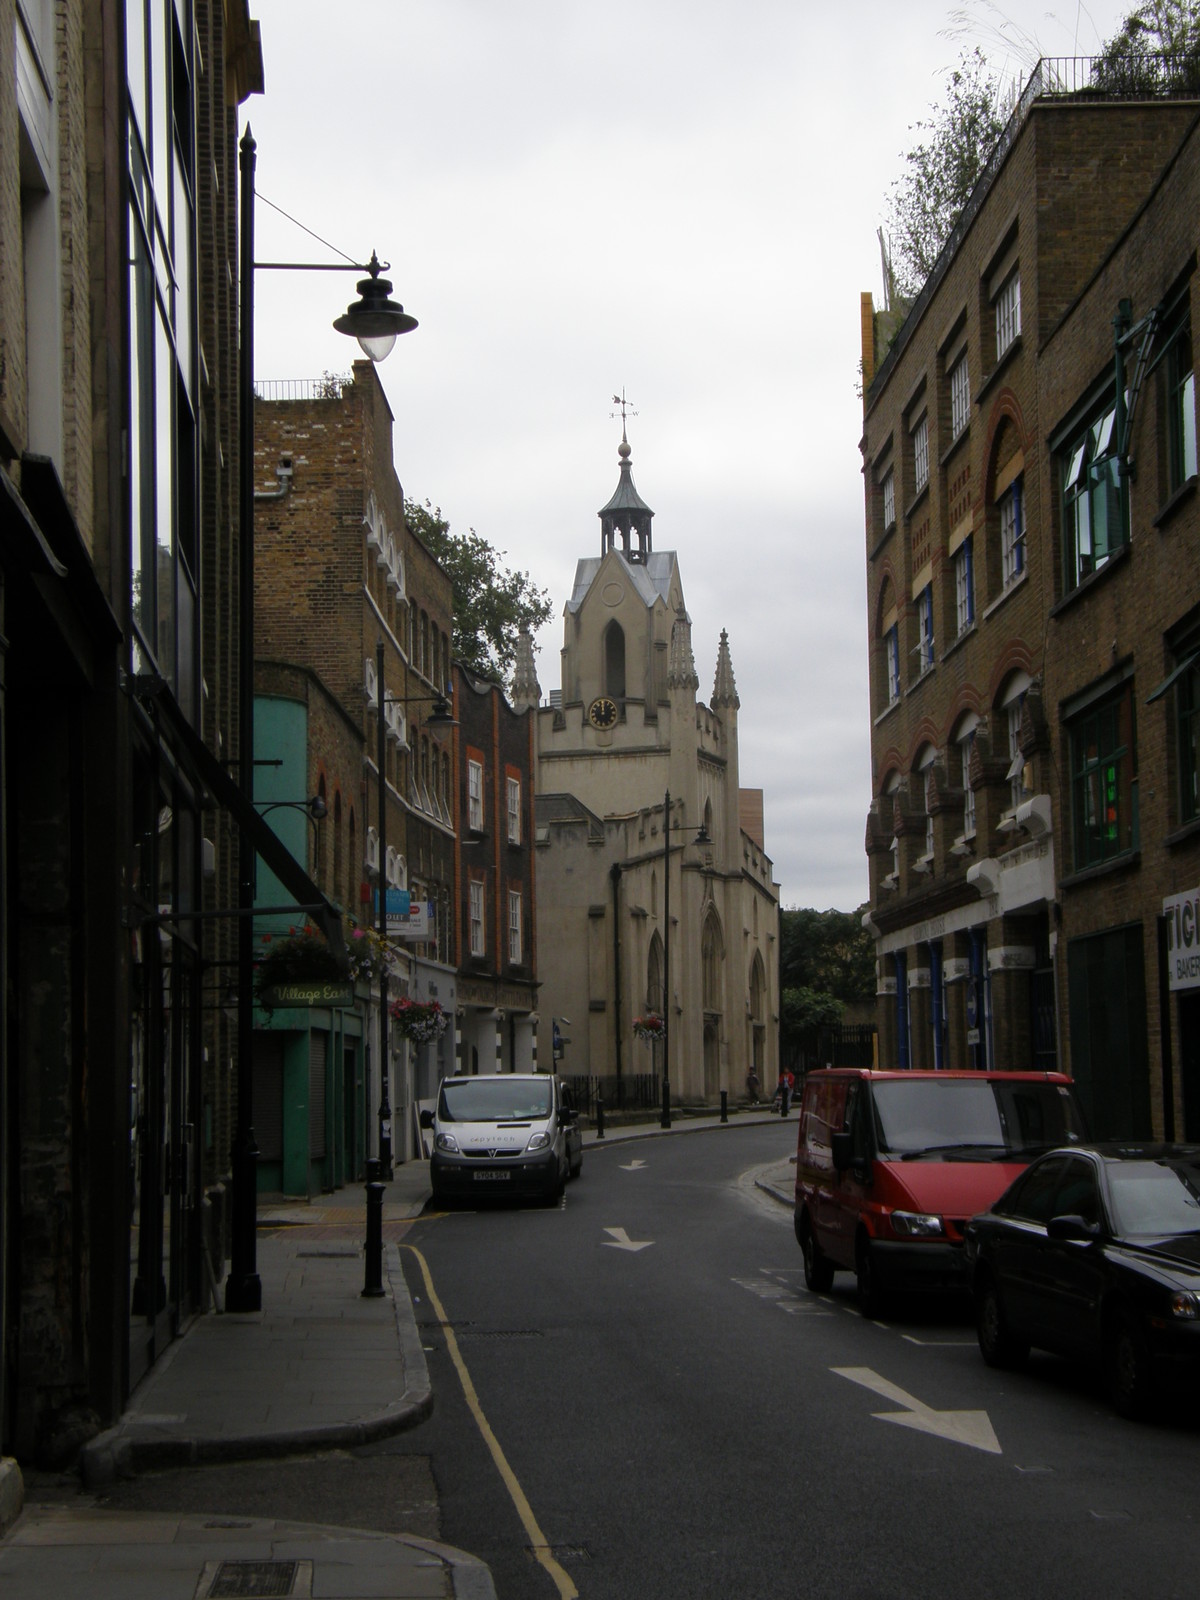 Bermondsey Street